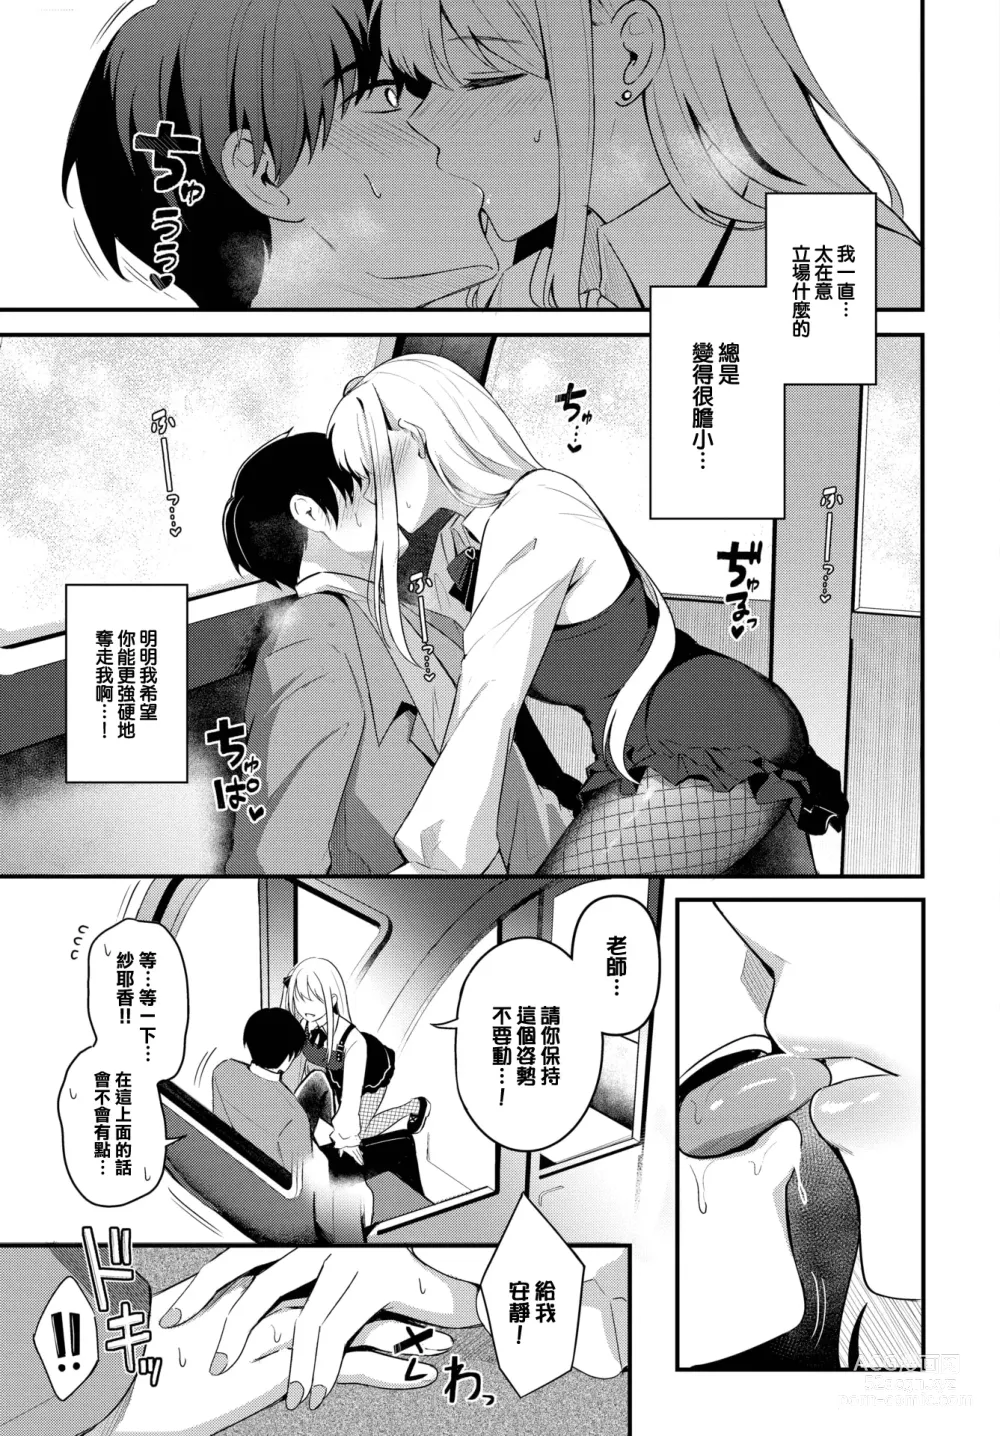 Page 6 of manga Joou no Shitsuke - Queens discipline ~after~